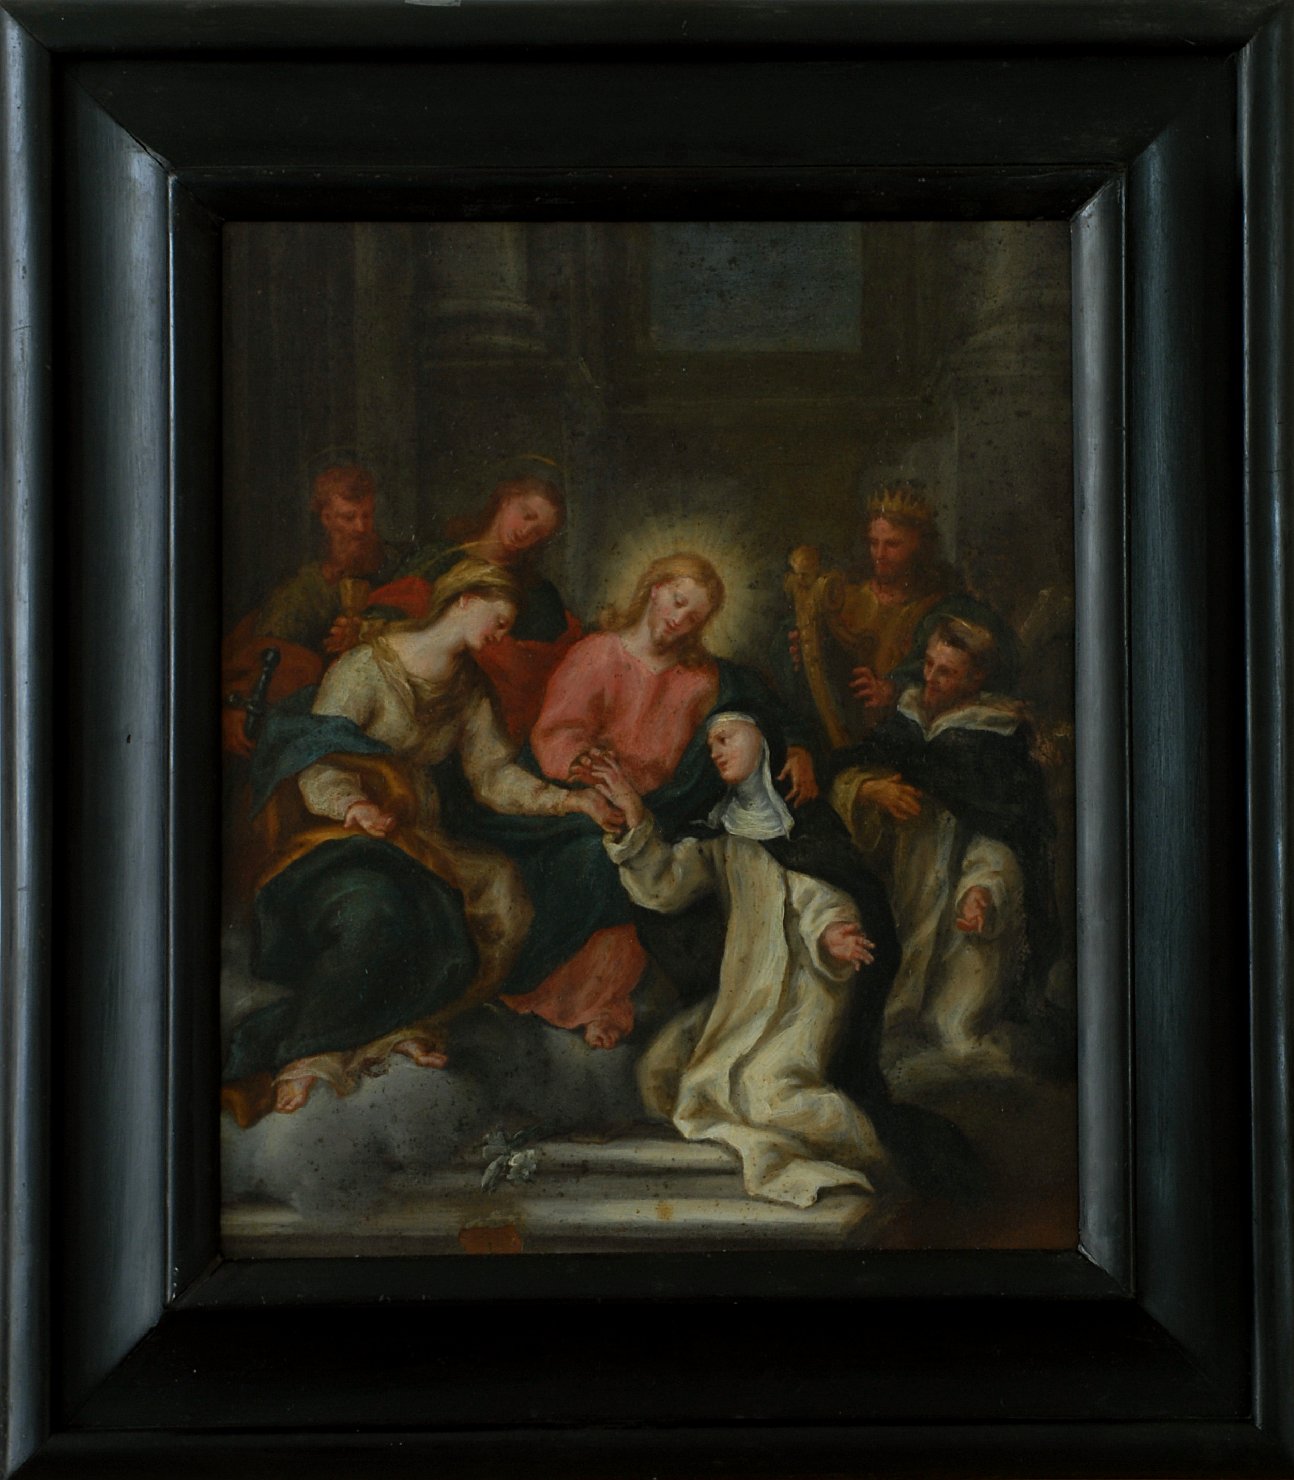 Sposalizio di santa caterina da siena, matrimonio mistico di santa caterina da siena (dipinto)